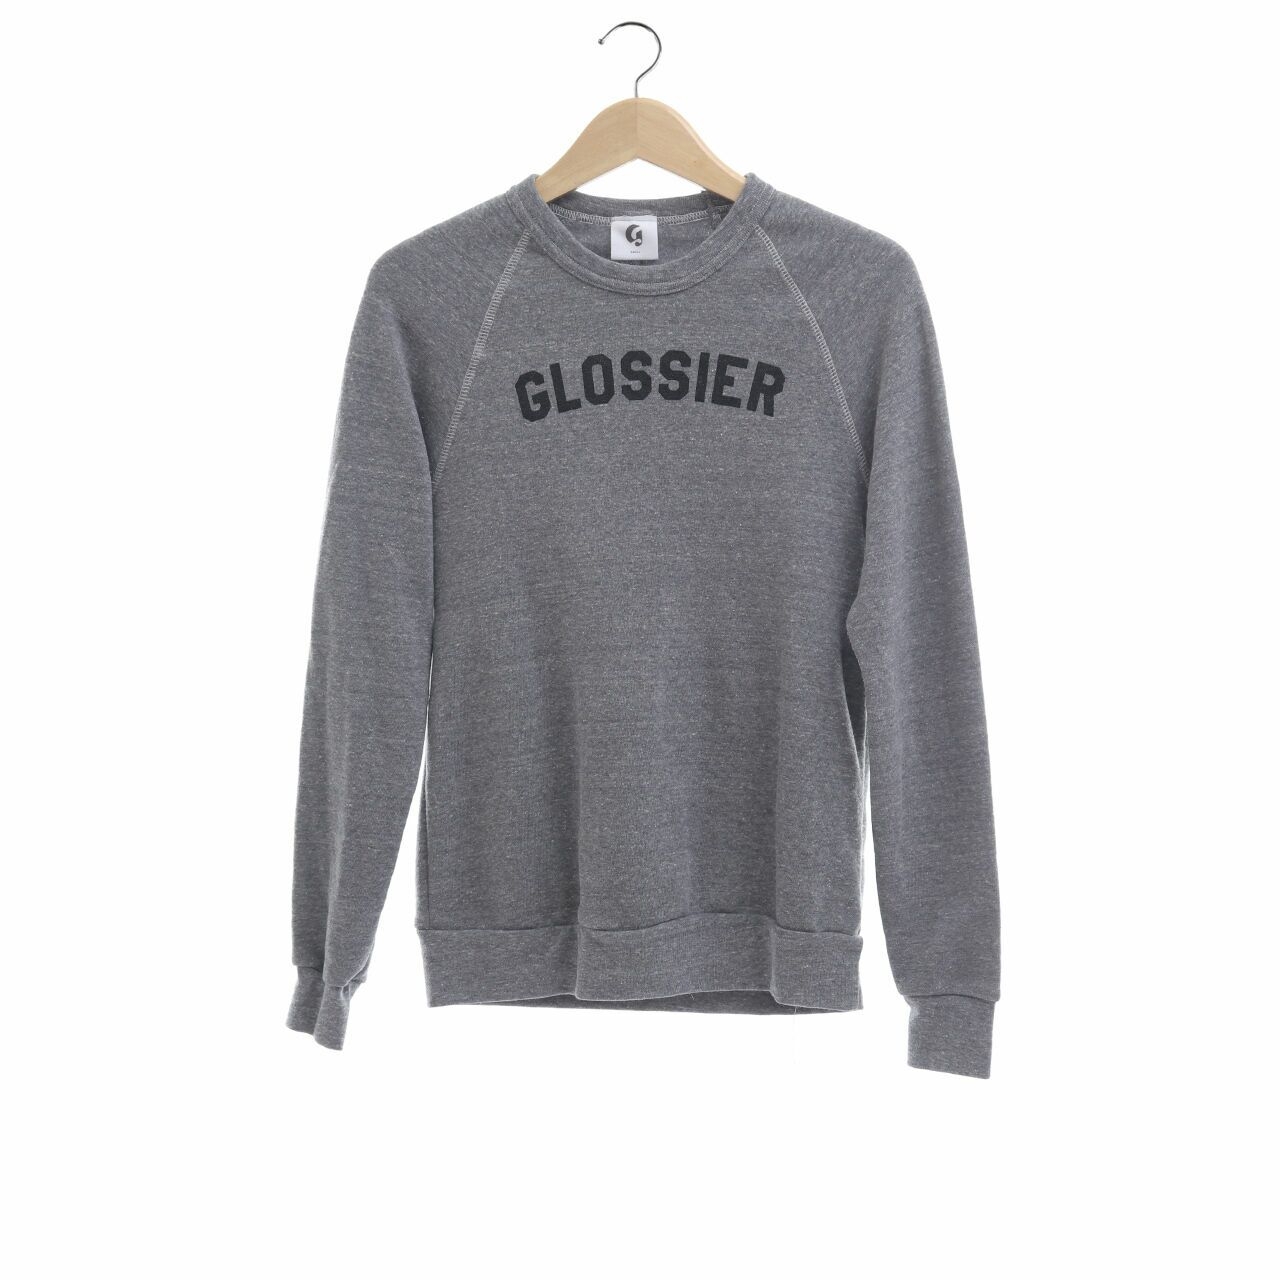 Glossier Grey Sweater